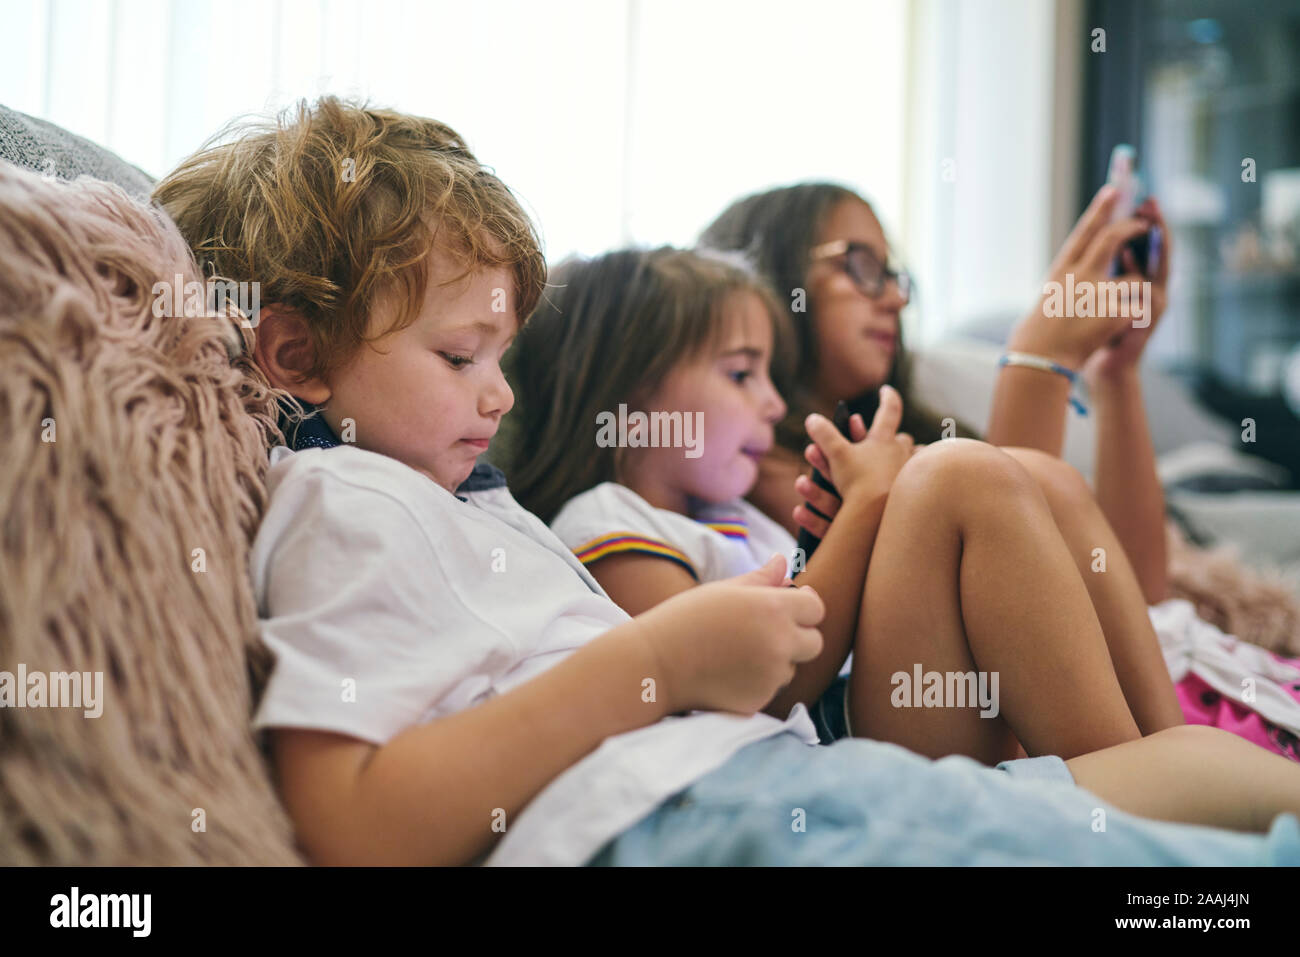 Friends enjoying computer games on sofa Stock Photo